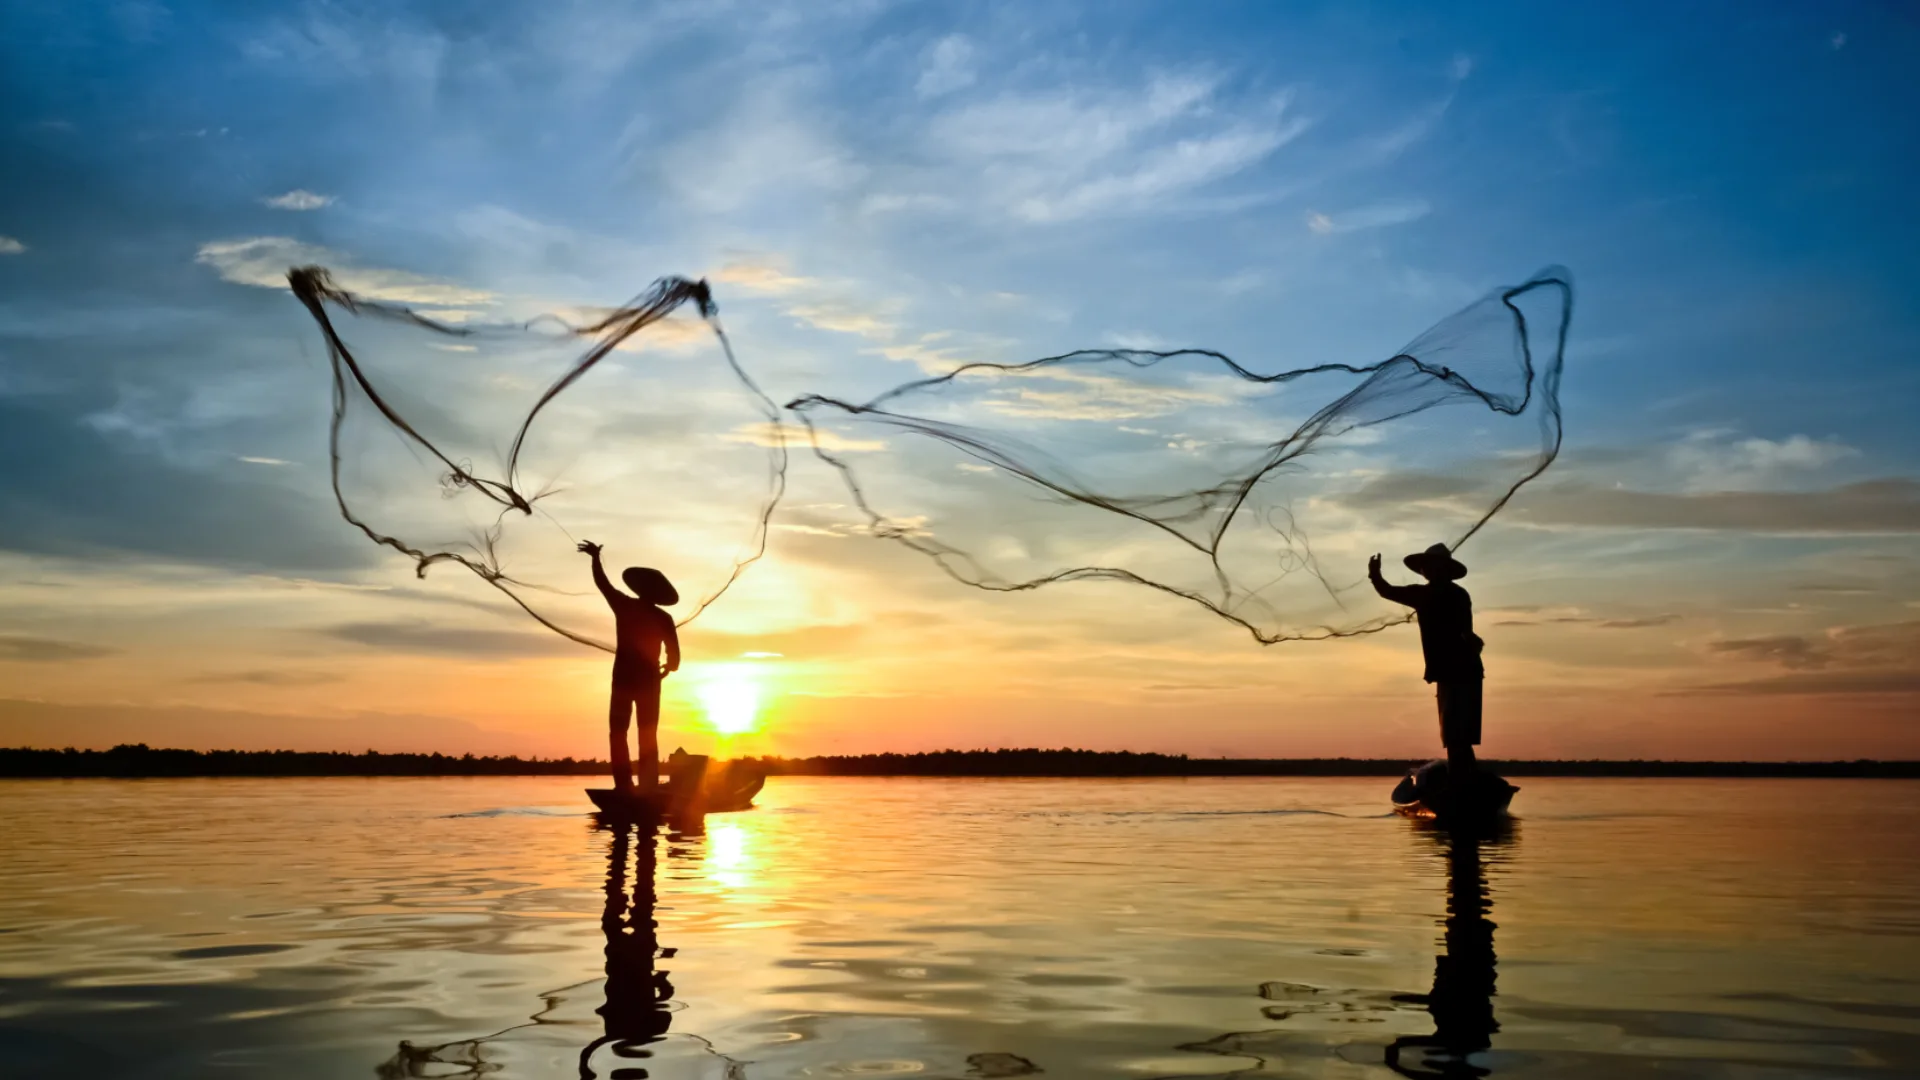 Fishing Techniques